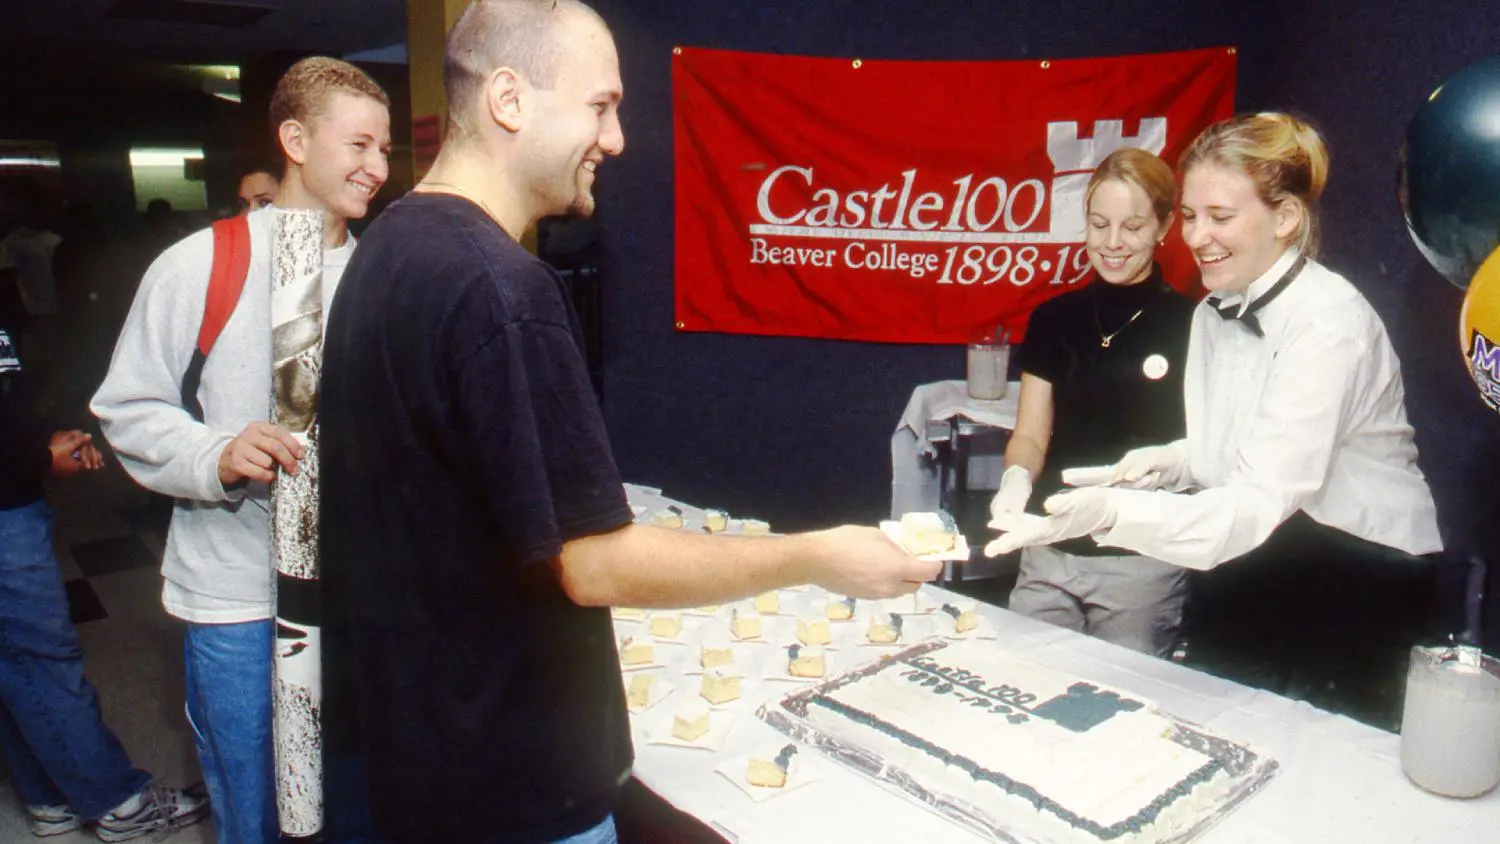 Beaver College students celebrate a milestone with cake.